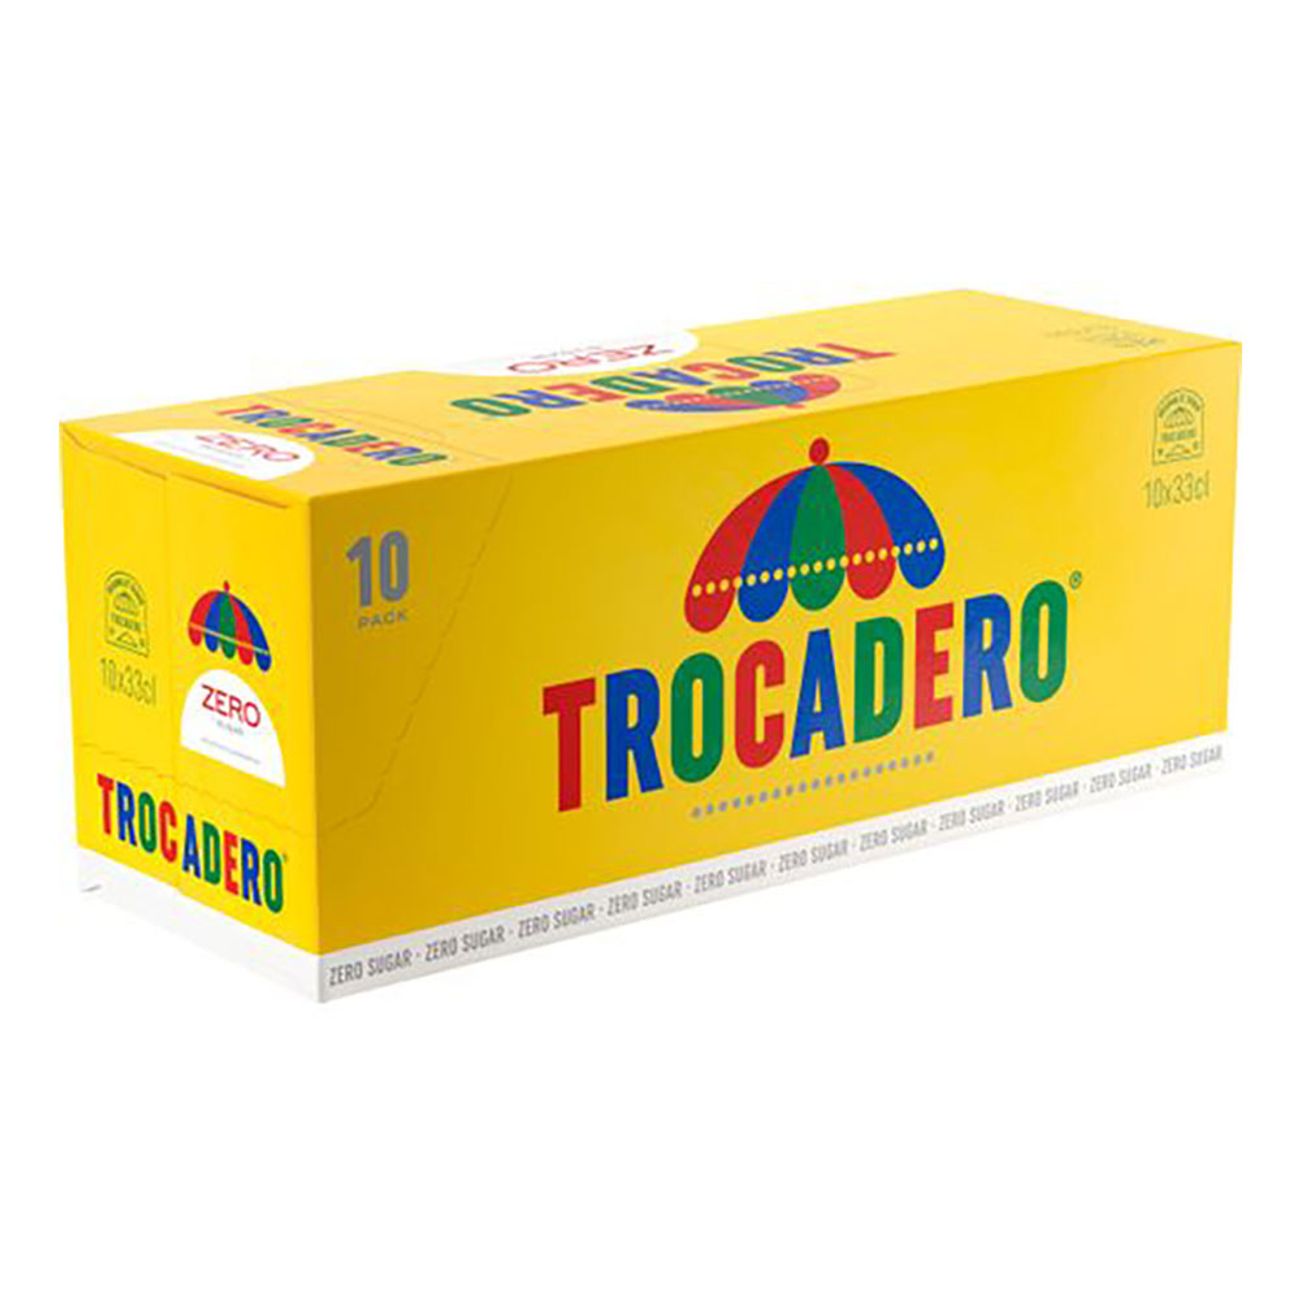 trocadero-zero-10-pack-81680-2